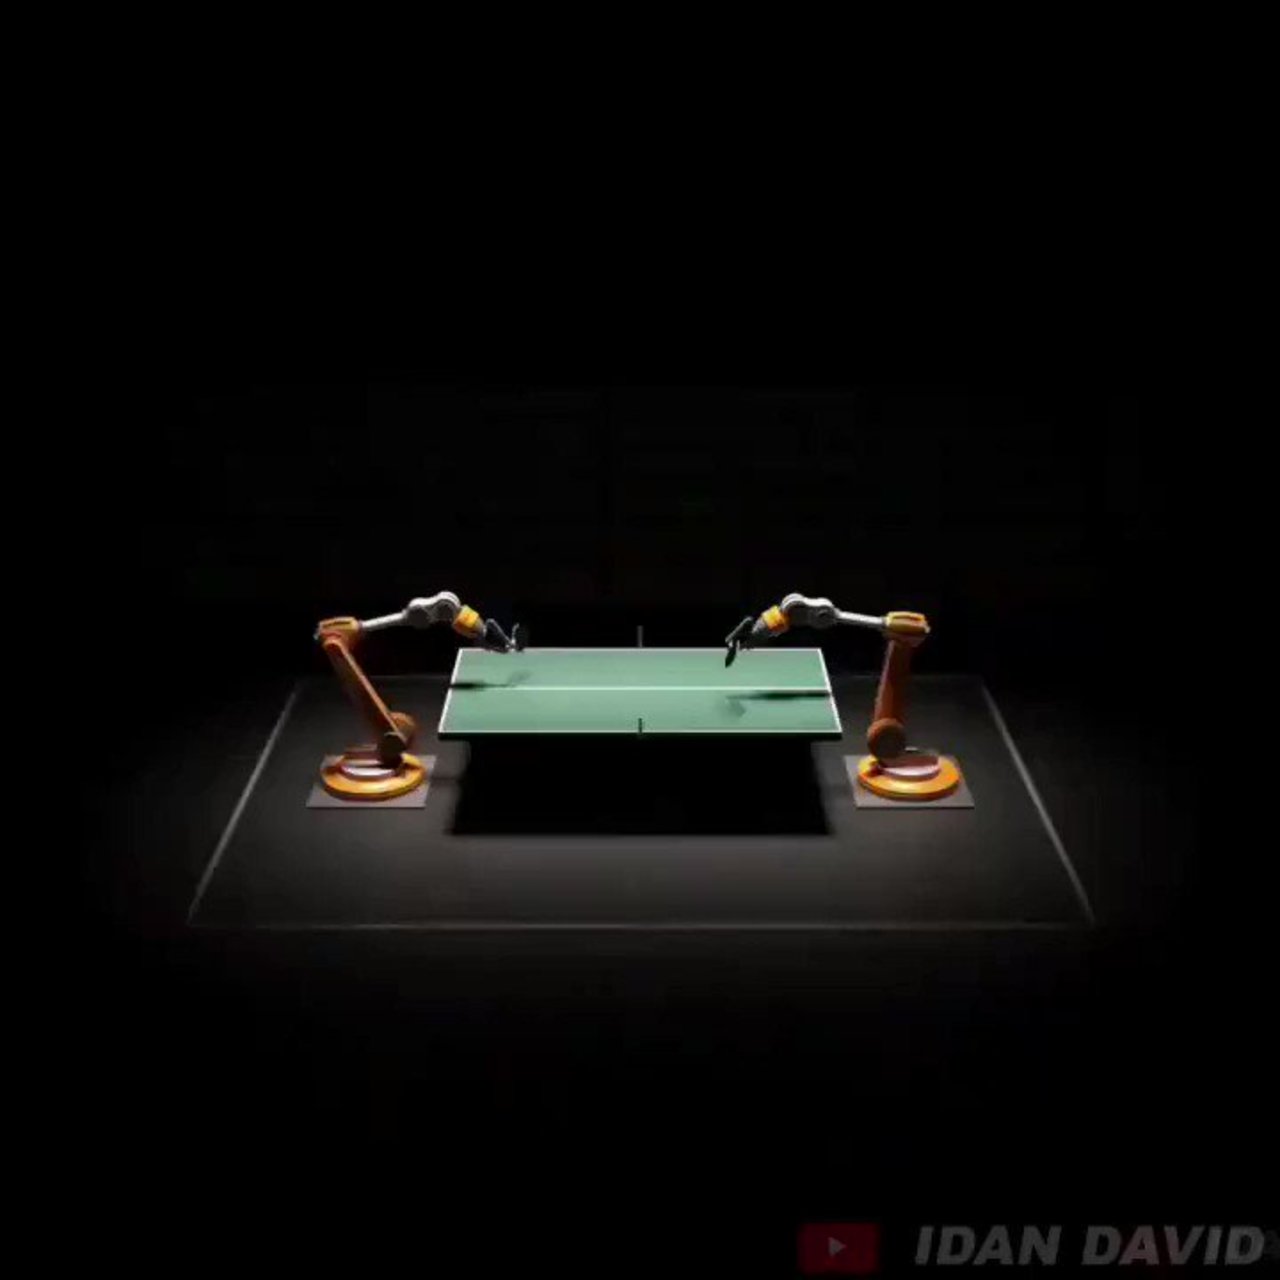 #Robot playing Table Tennis via @jblefevre60 #AI #ArtificialIntelligence #MI #Robotics #Sports #Innovation #RPA #Automation cc: @ronald_vanloon @pbalakrishnarao @chr1sa https://t.co/hNn7rhd05H